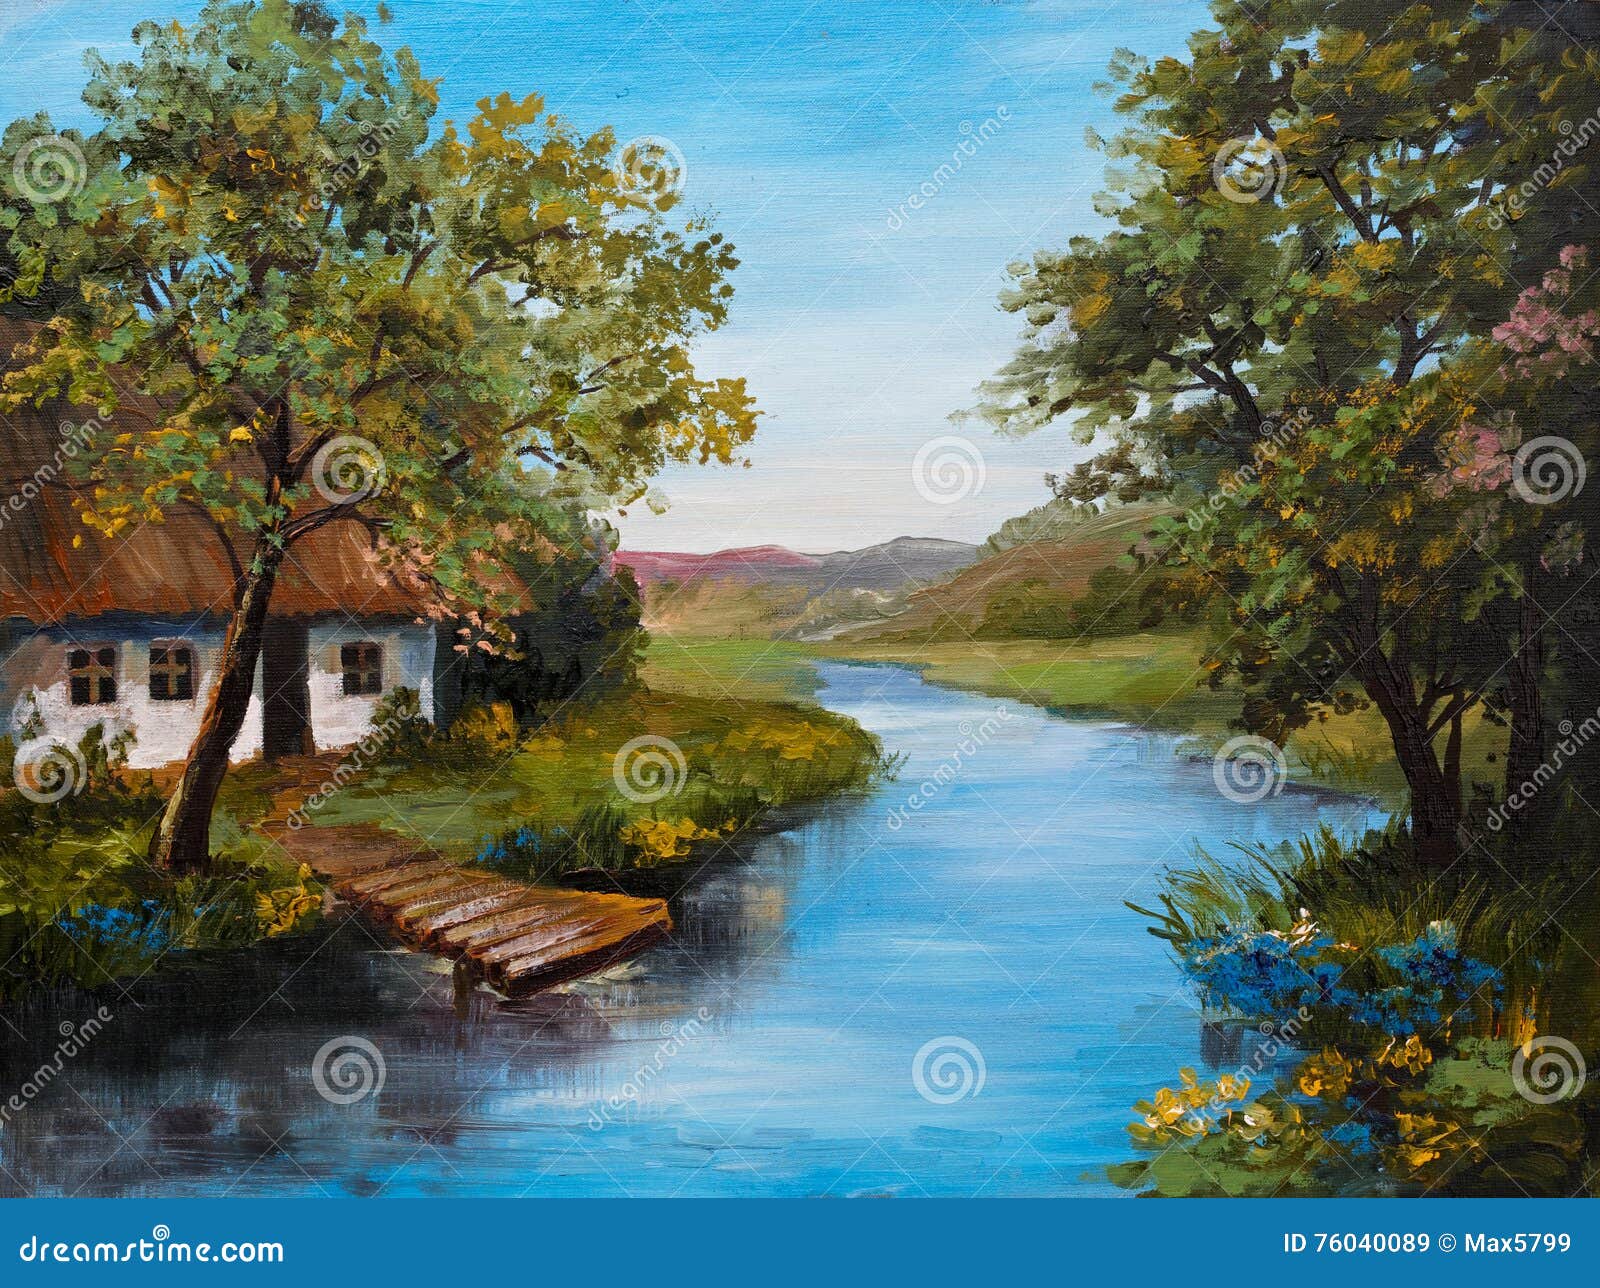 oil painting - farmhouse near the river, river blue, blue sky